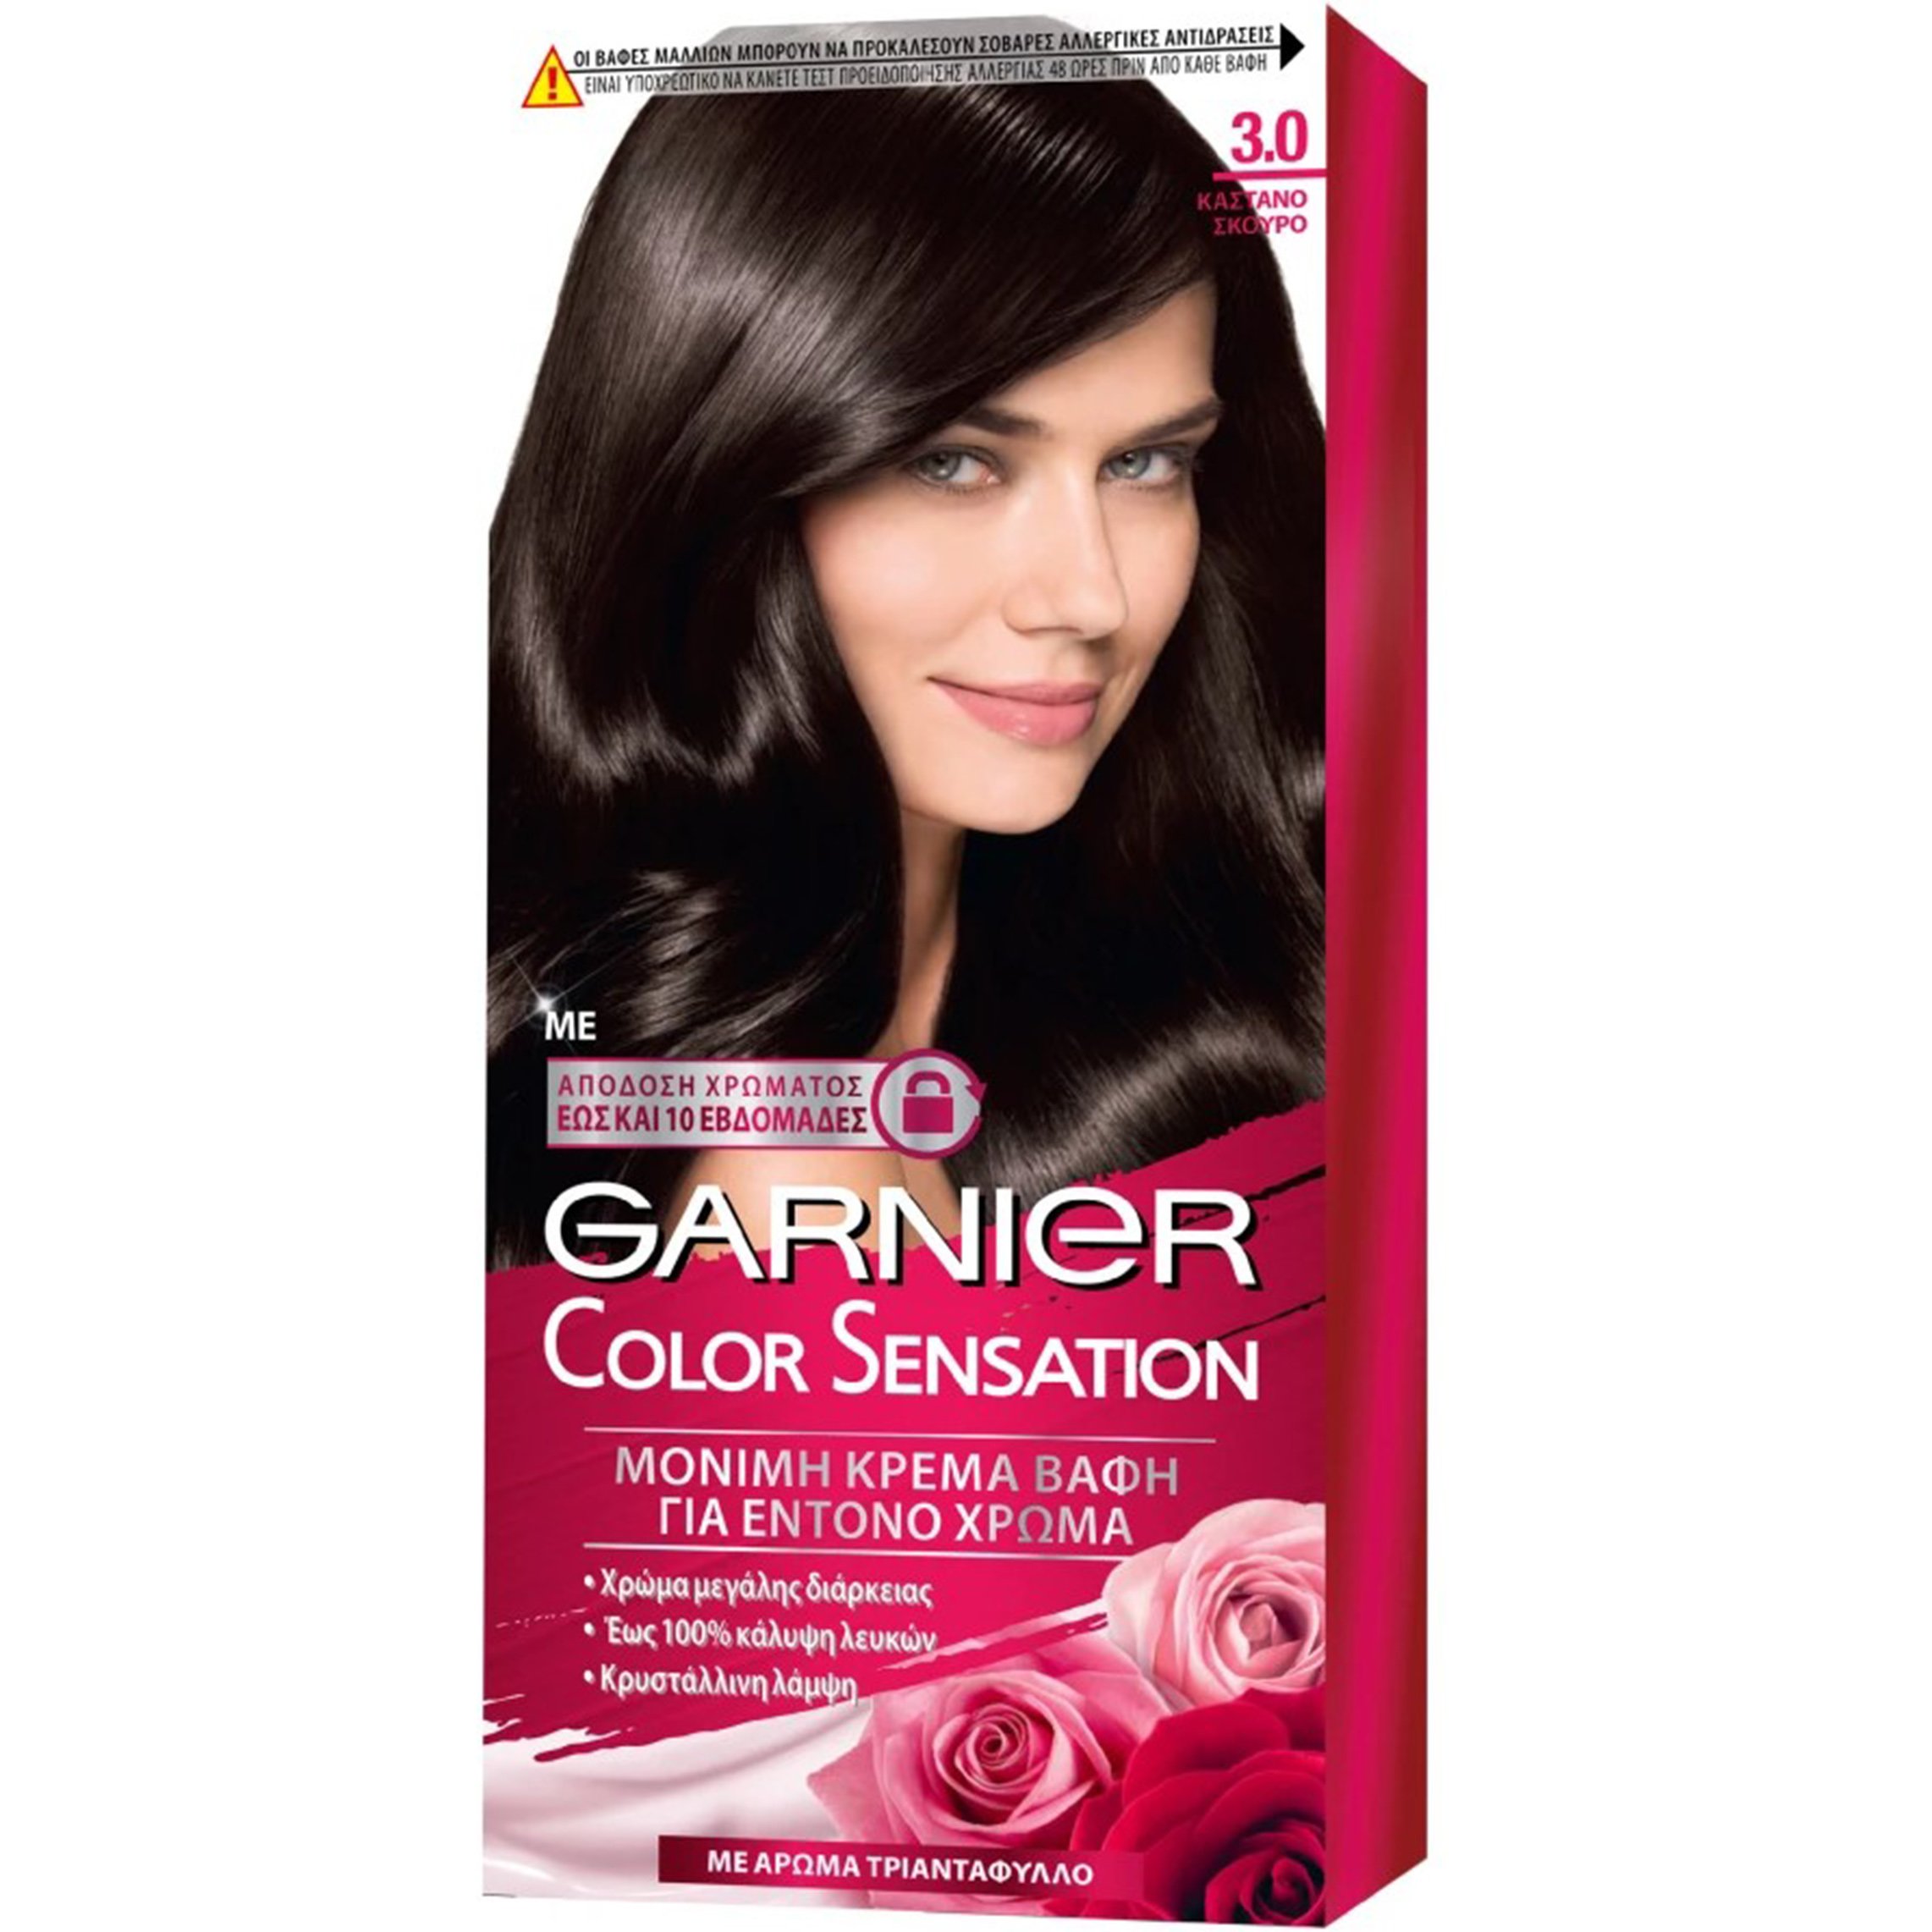 Garnier Color Sensation Permanent Hair Color Kit Μόνιμη Κρέμα Βαφή Μαλλιών με Άρωμα Τριαντάφυλλο 1 Τεμάχιο – 3.0 Καστανό Σκούρο